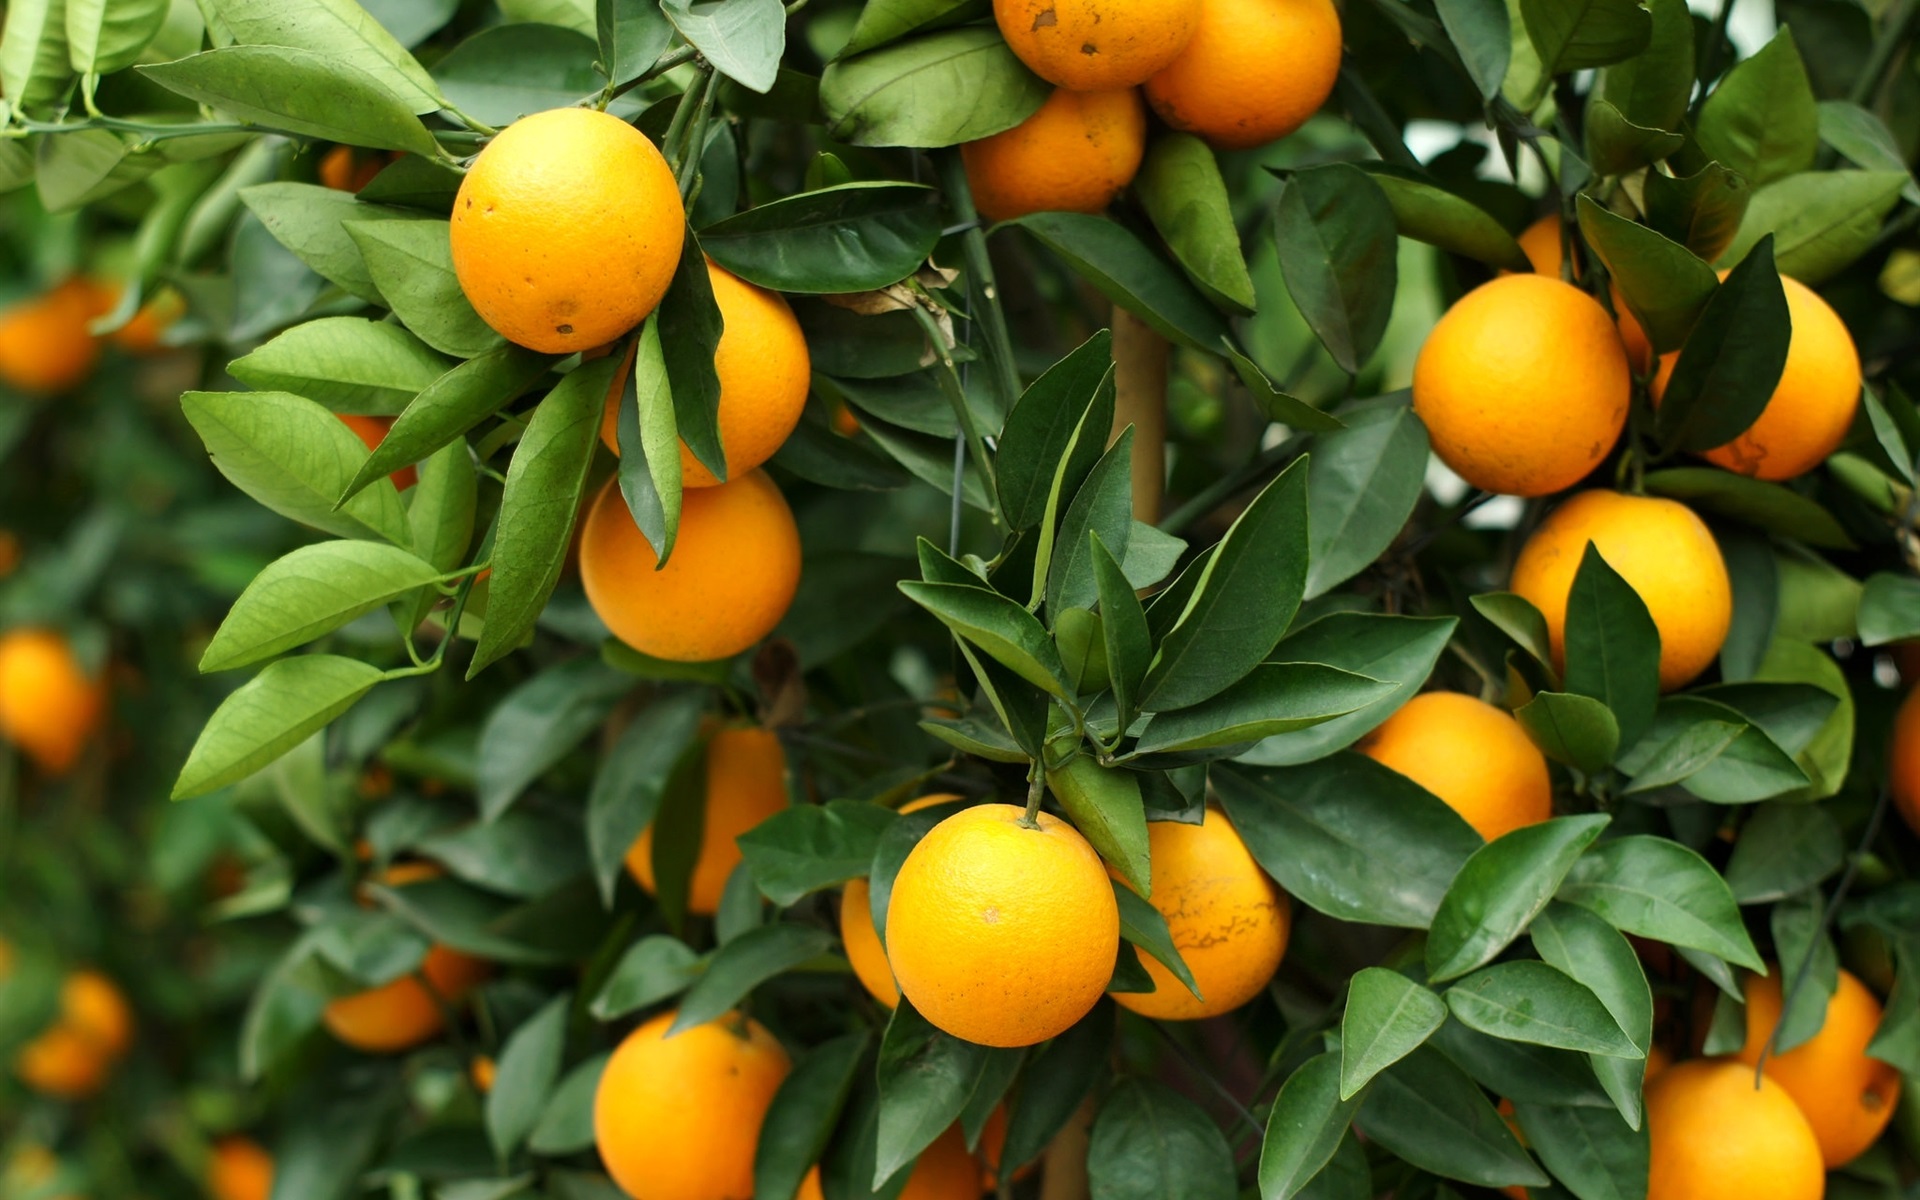 Naranja astringente o laxante